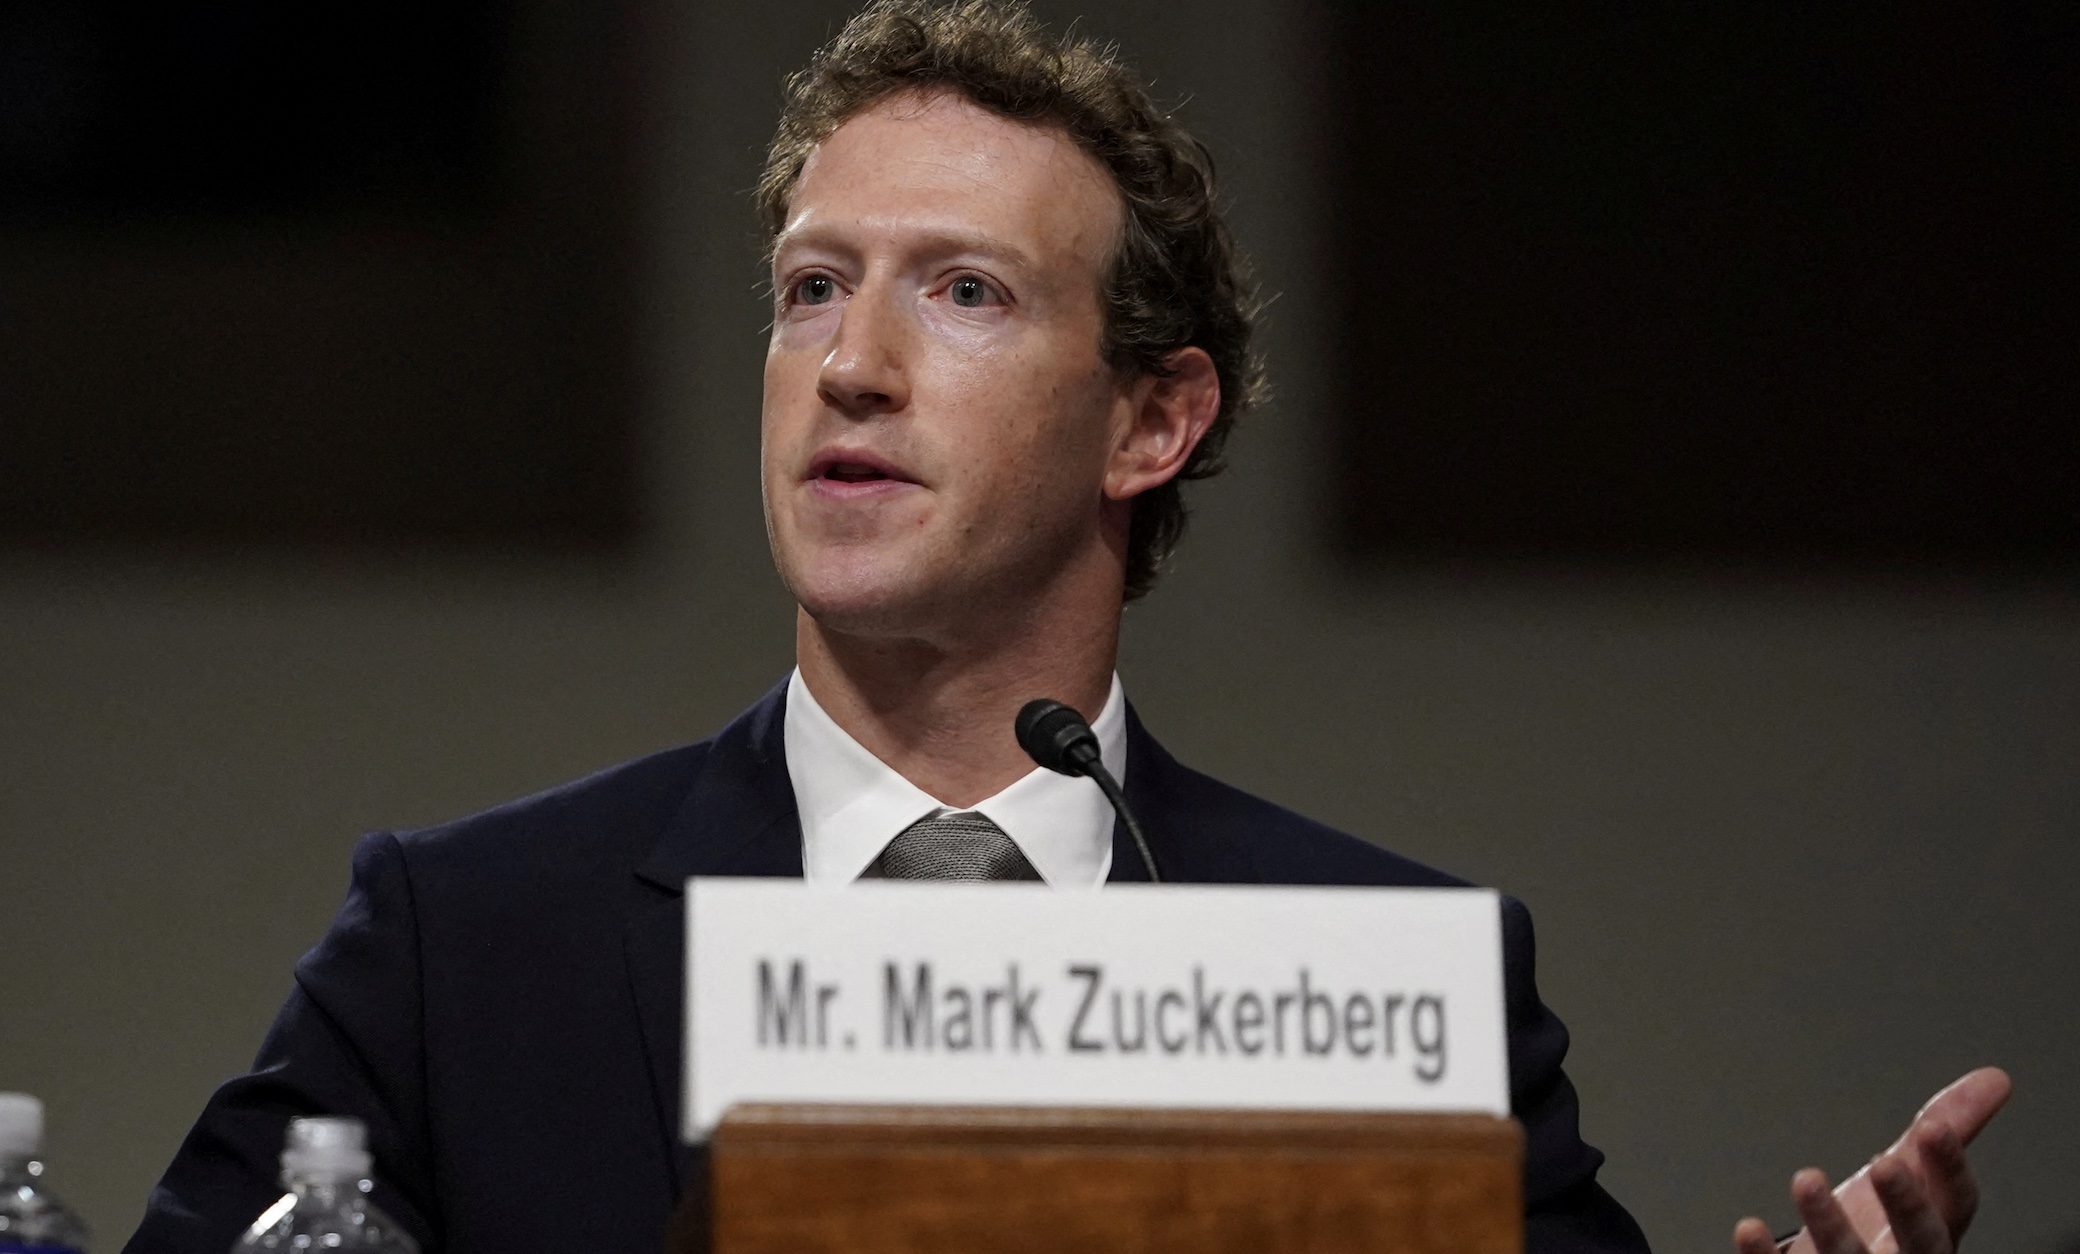 Mark Zuckerberg is officially wealthier than Bill Gates